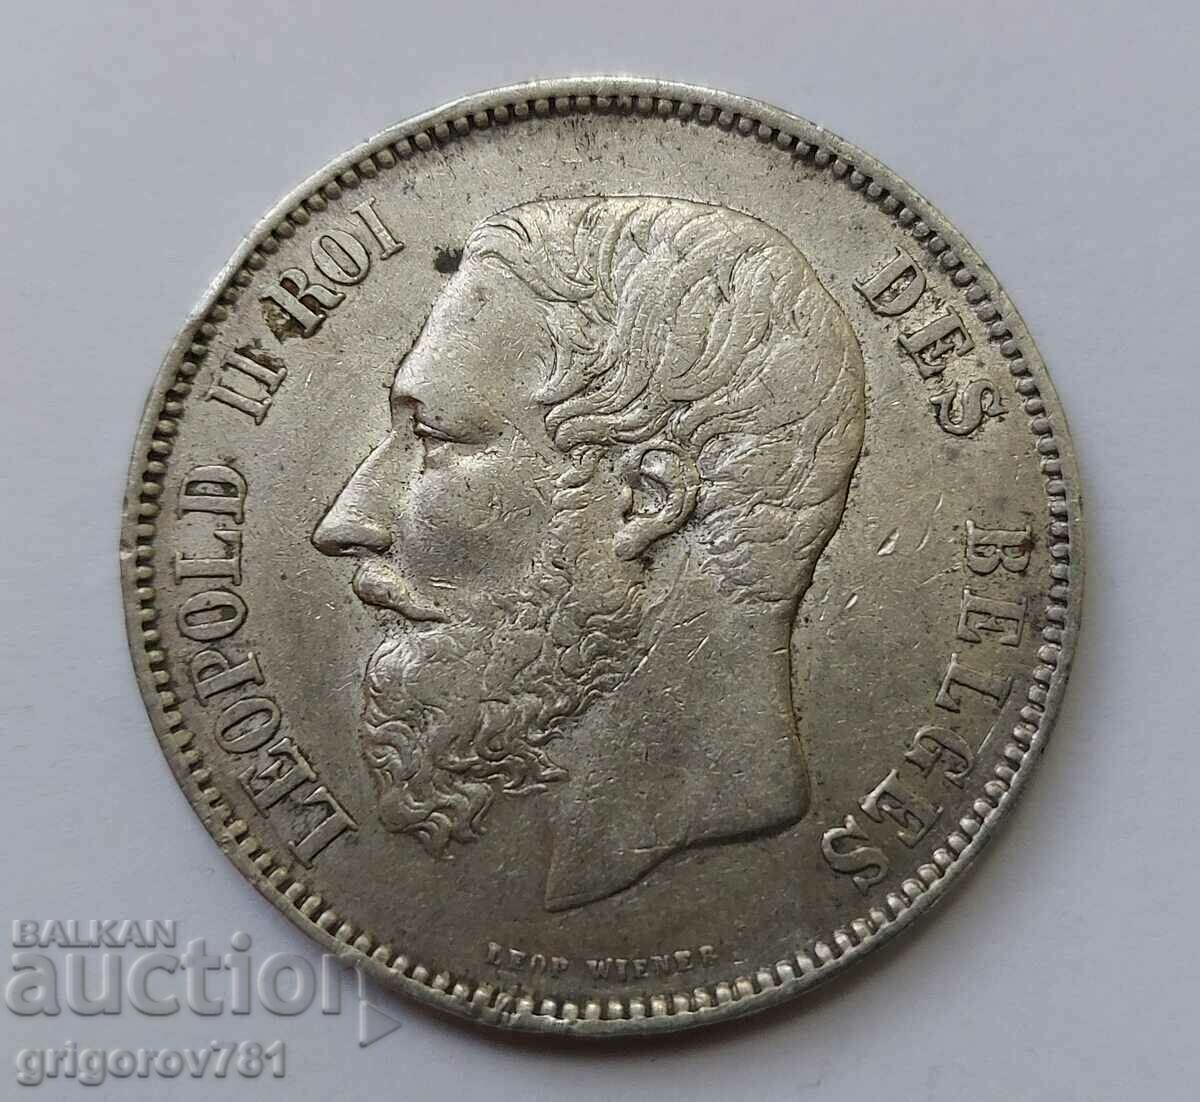 5 Franci Argint Belgia 1873 - Moneda de argint #103